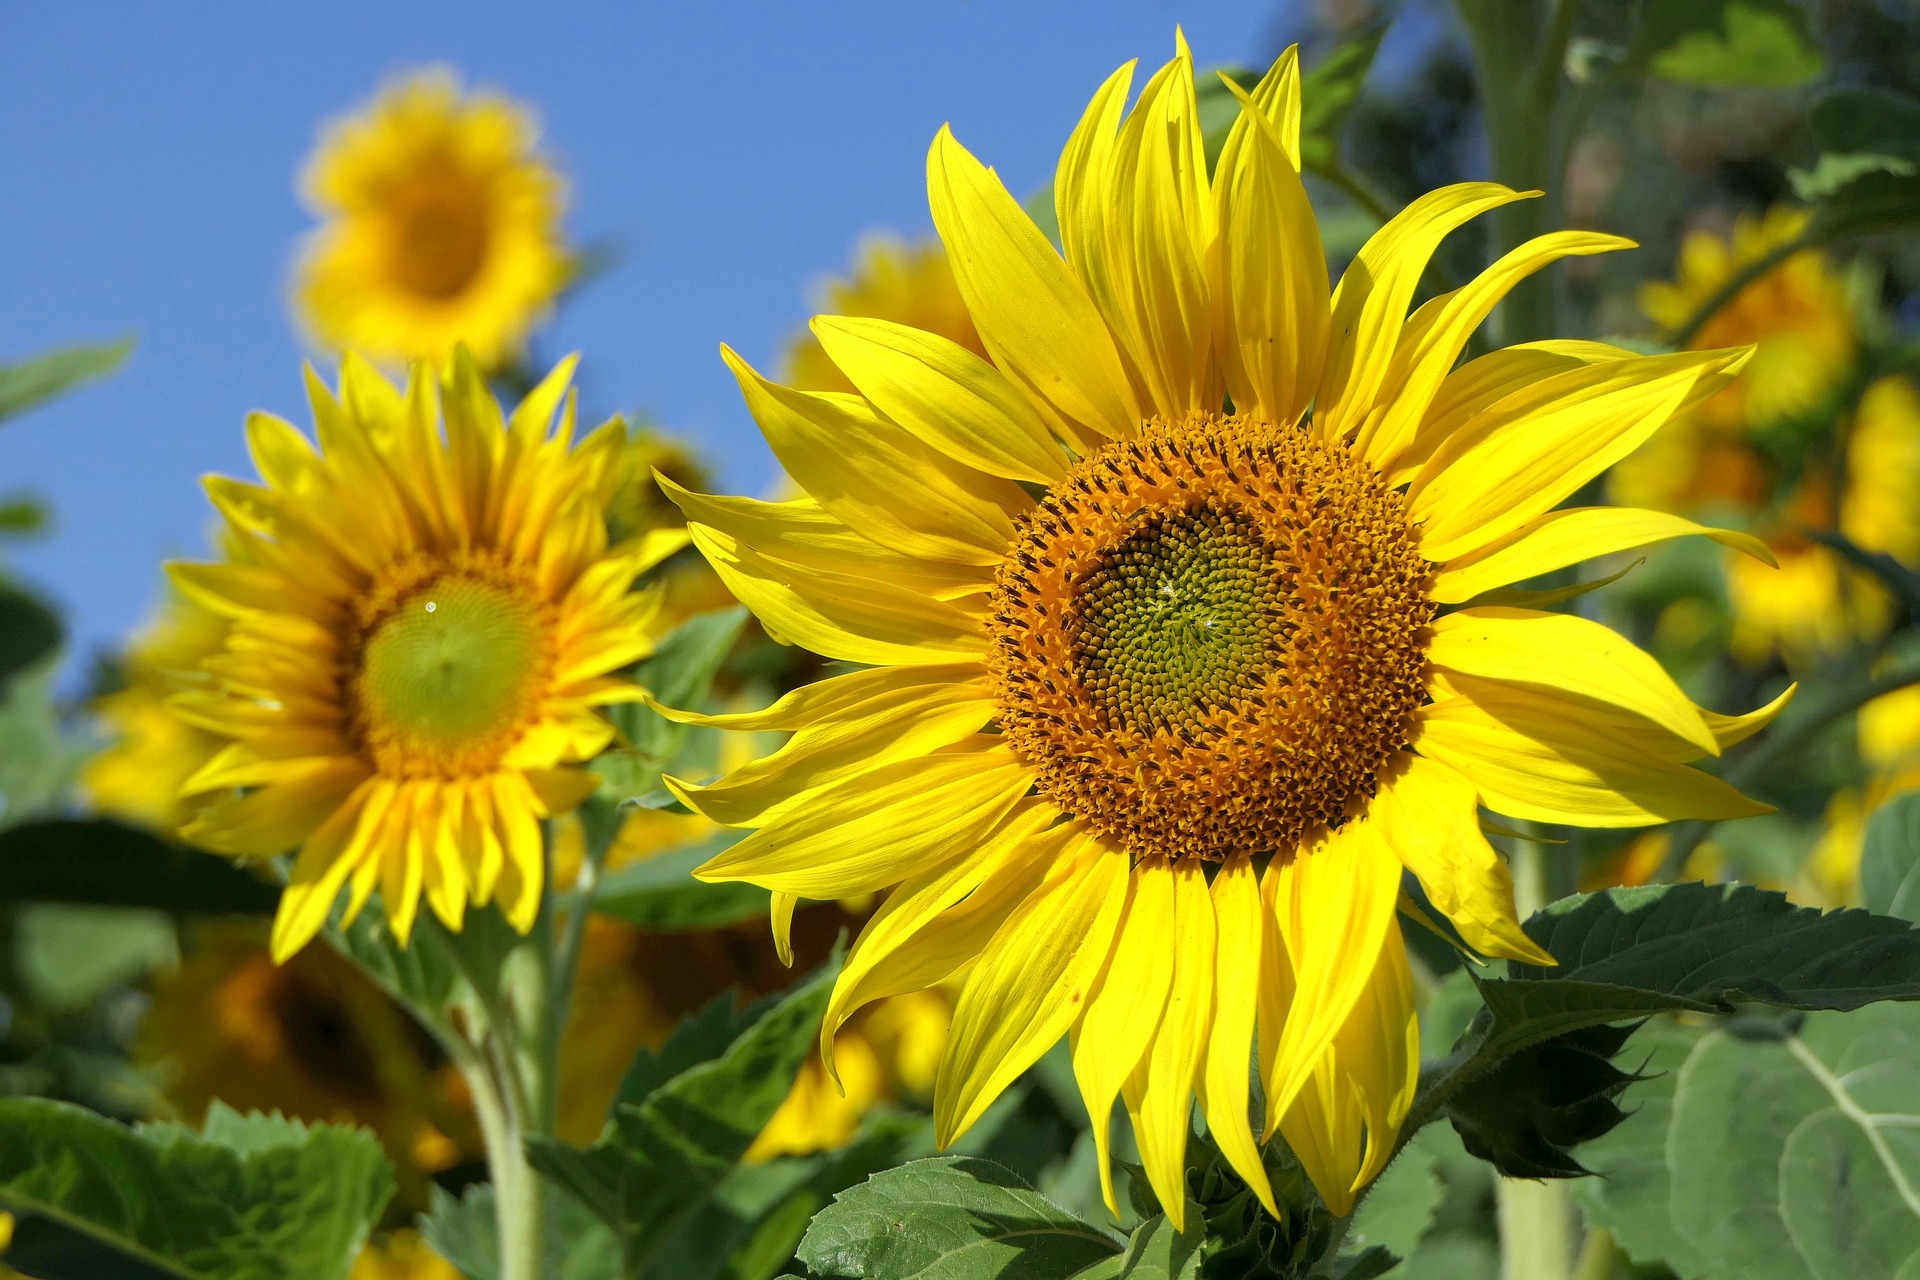 sunflower-3526901_1920 (c) Uschi Dugulin auf Pixabay